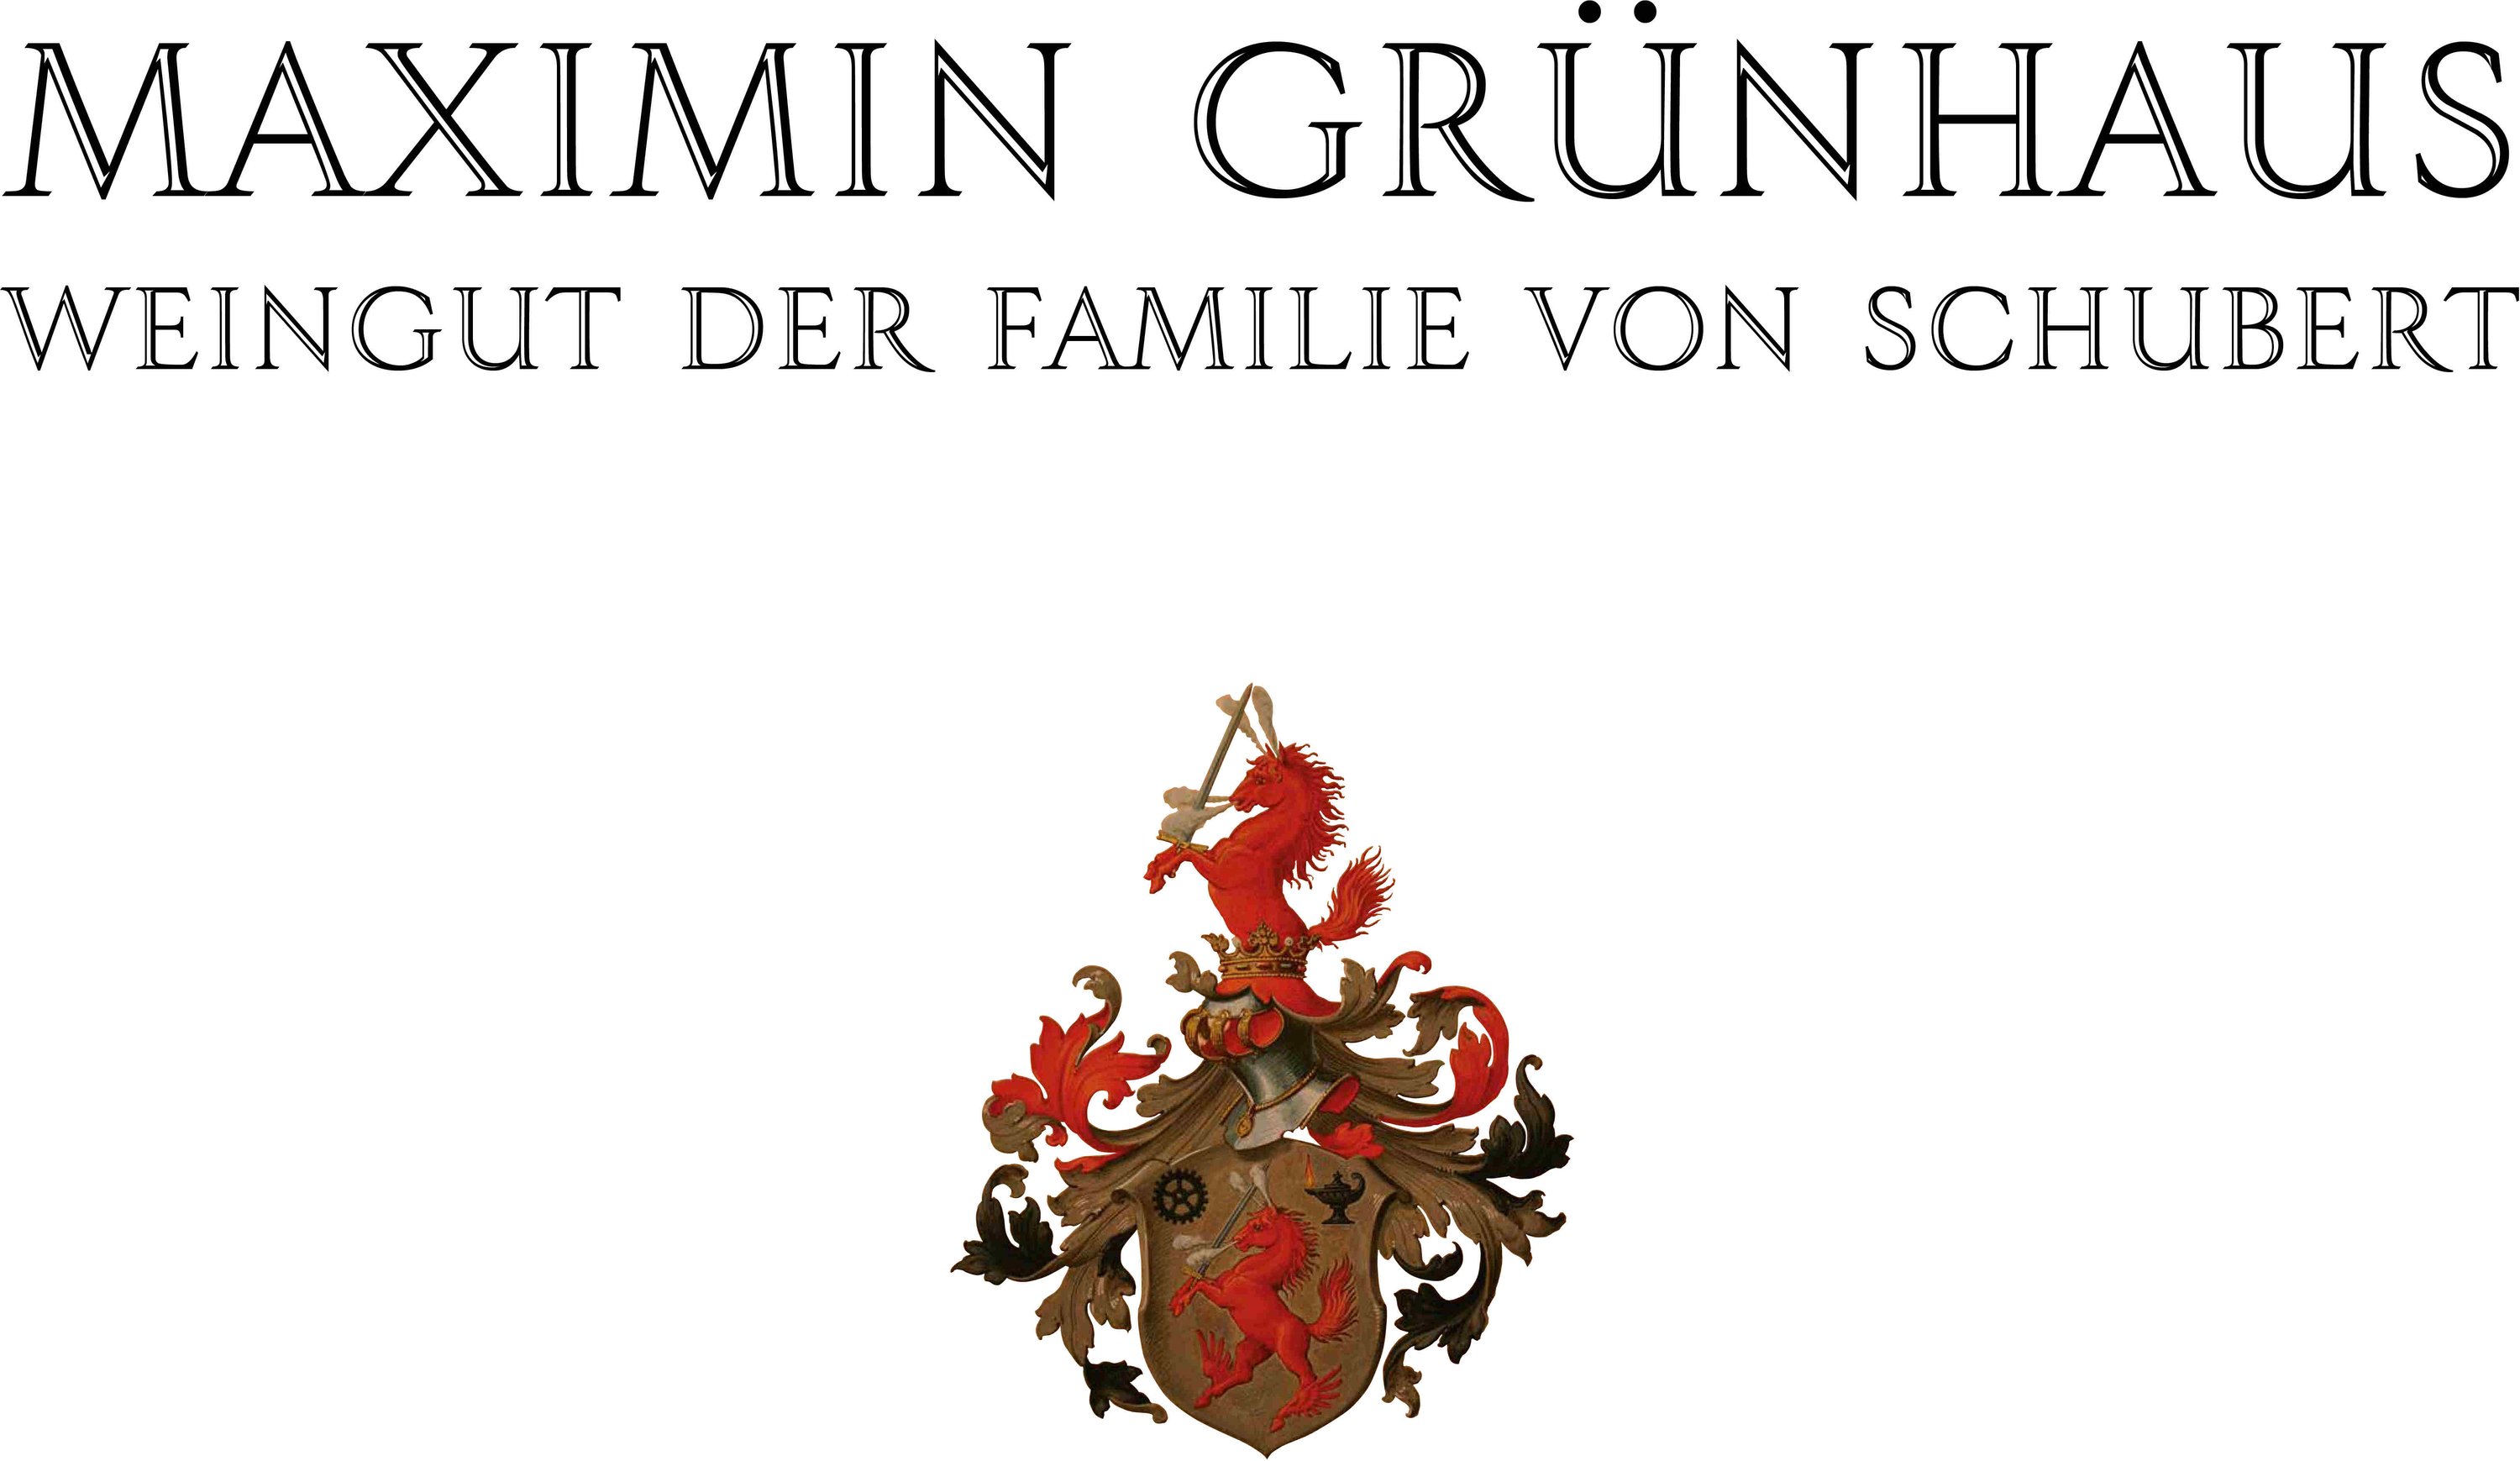 Maximin Grünhaus